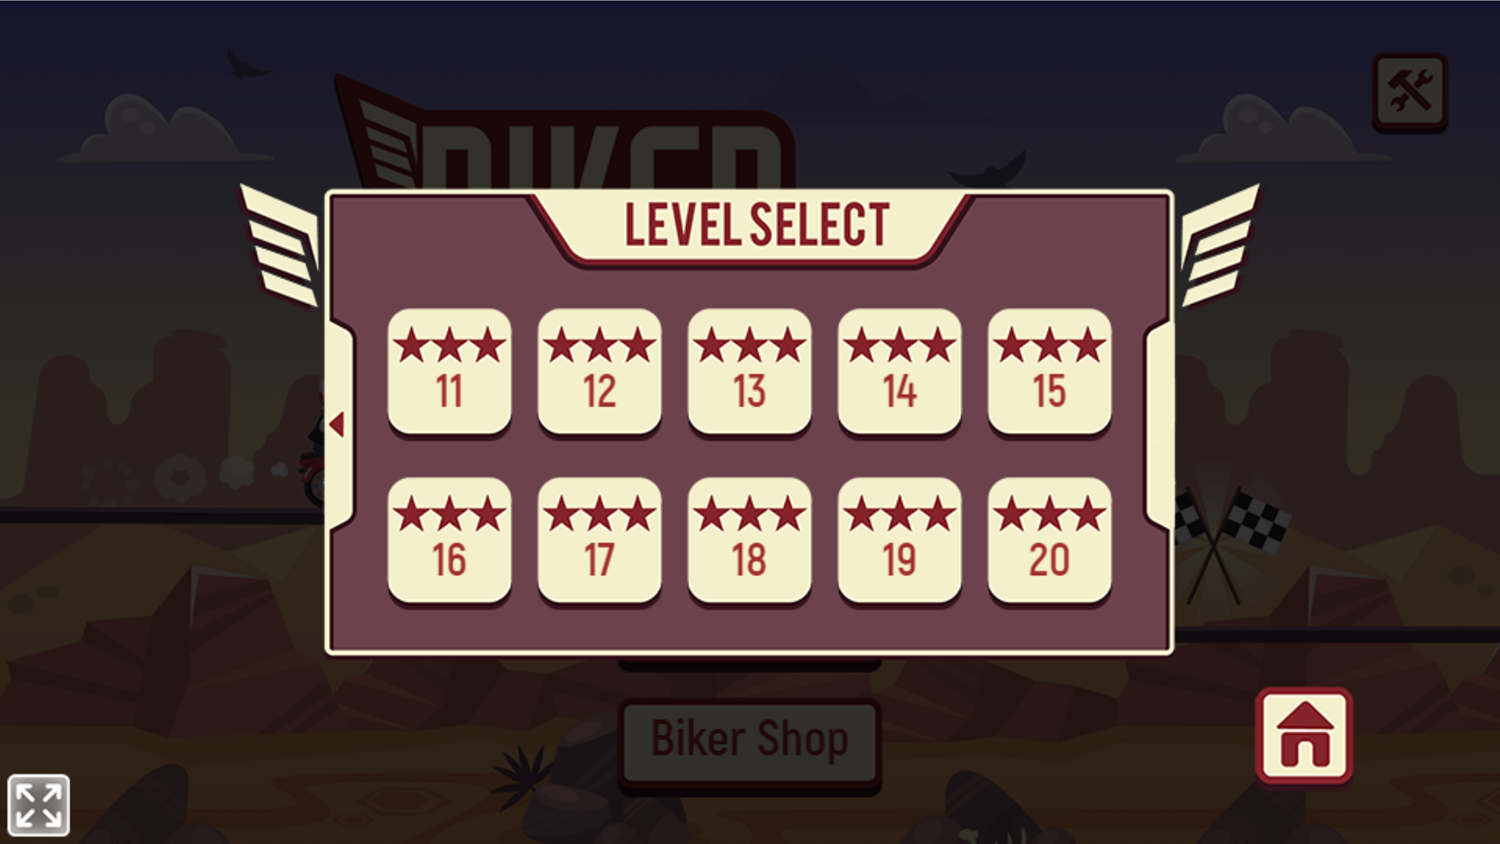 Biker Lane Game Second Level Select Screen Screenshot.